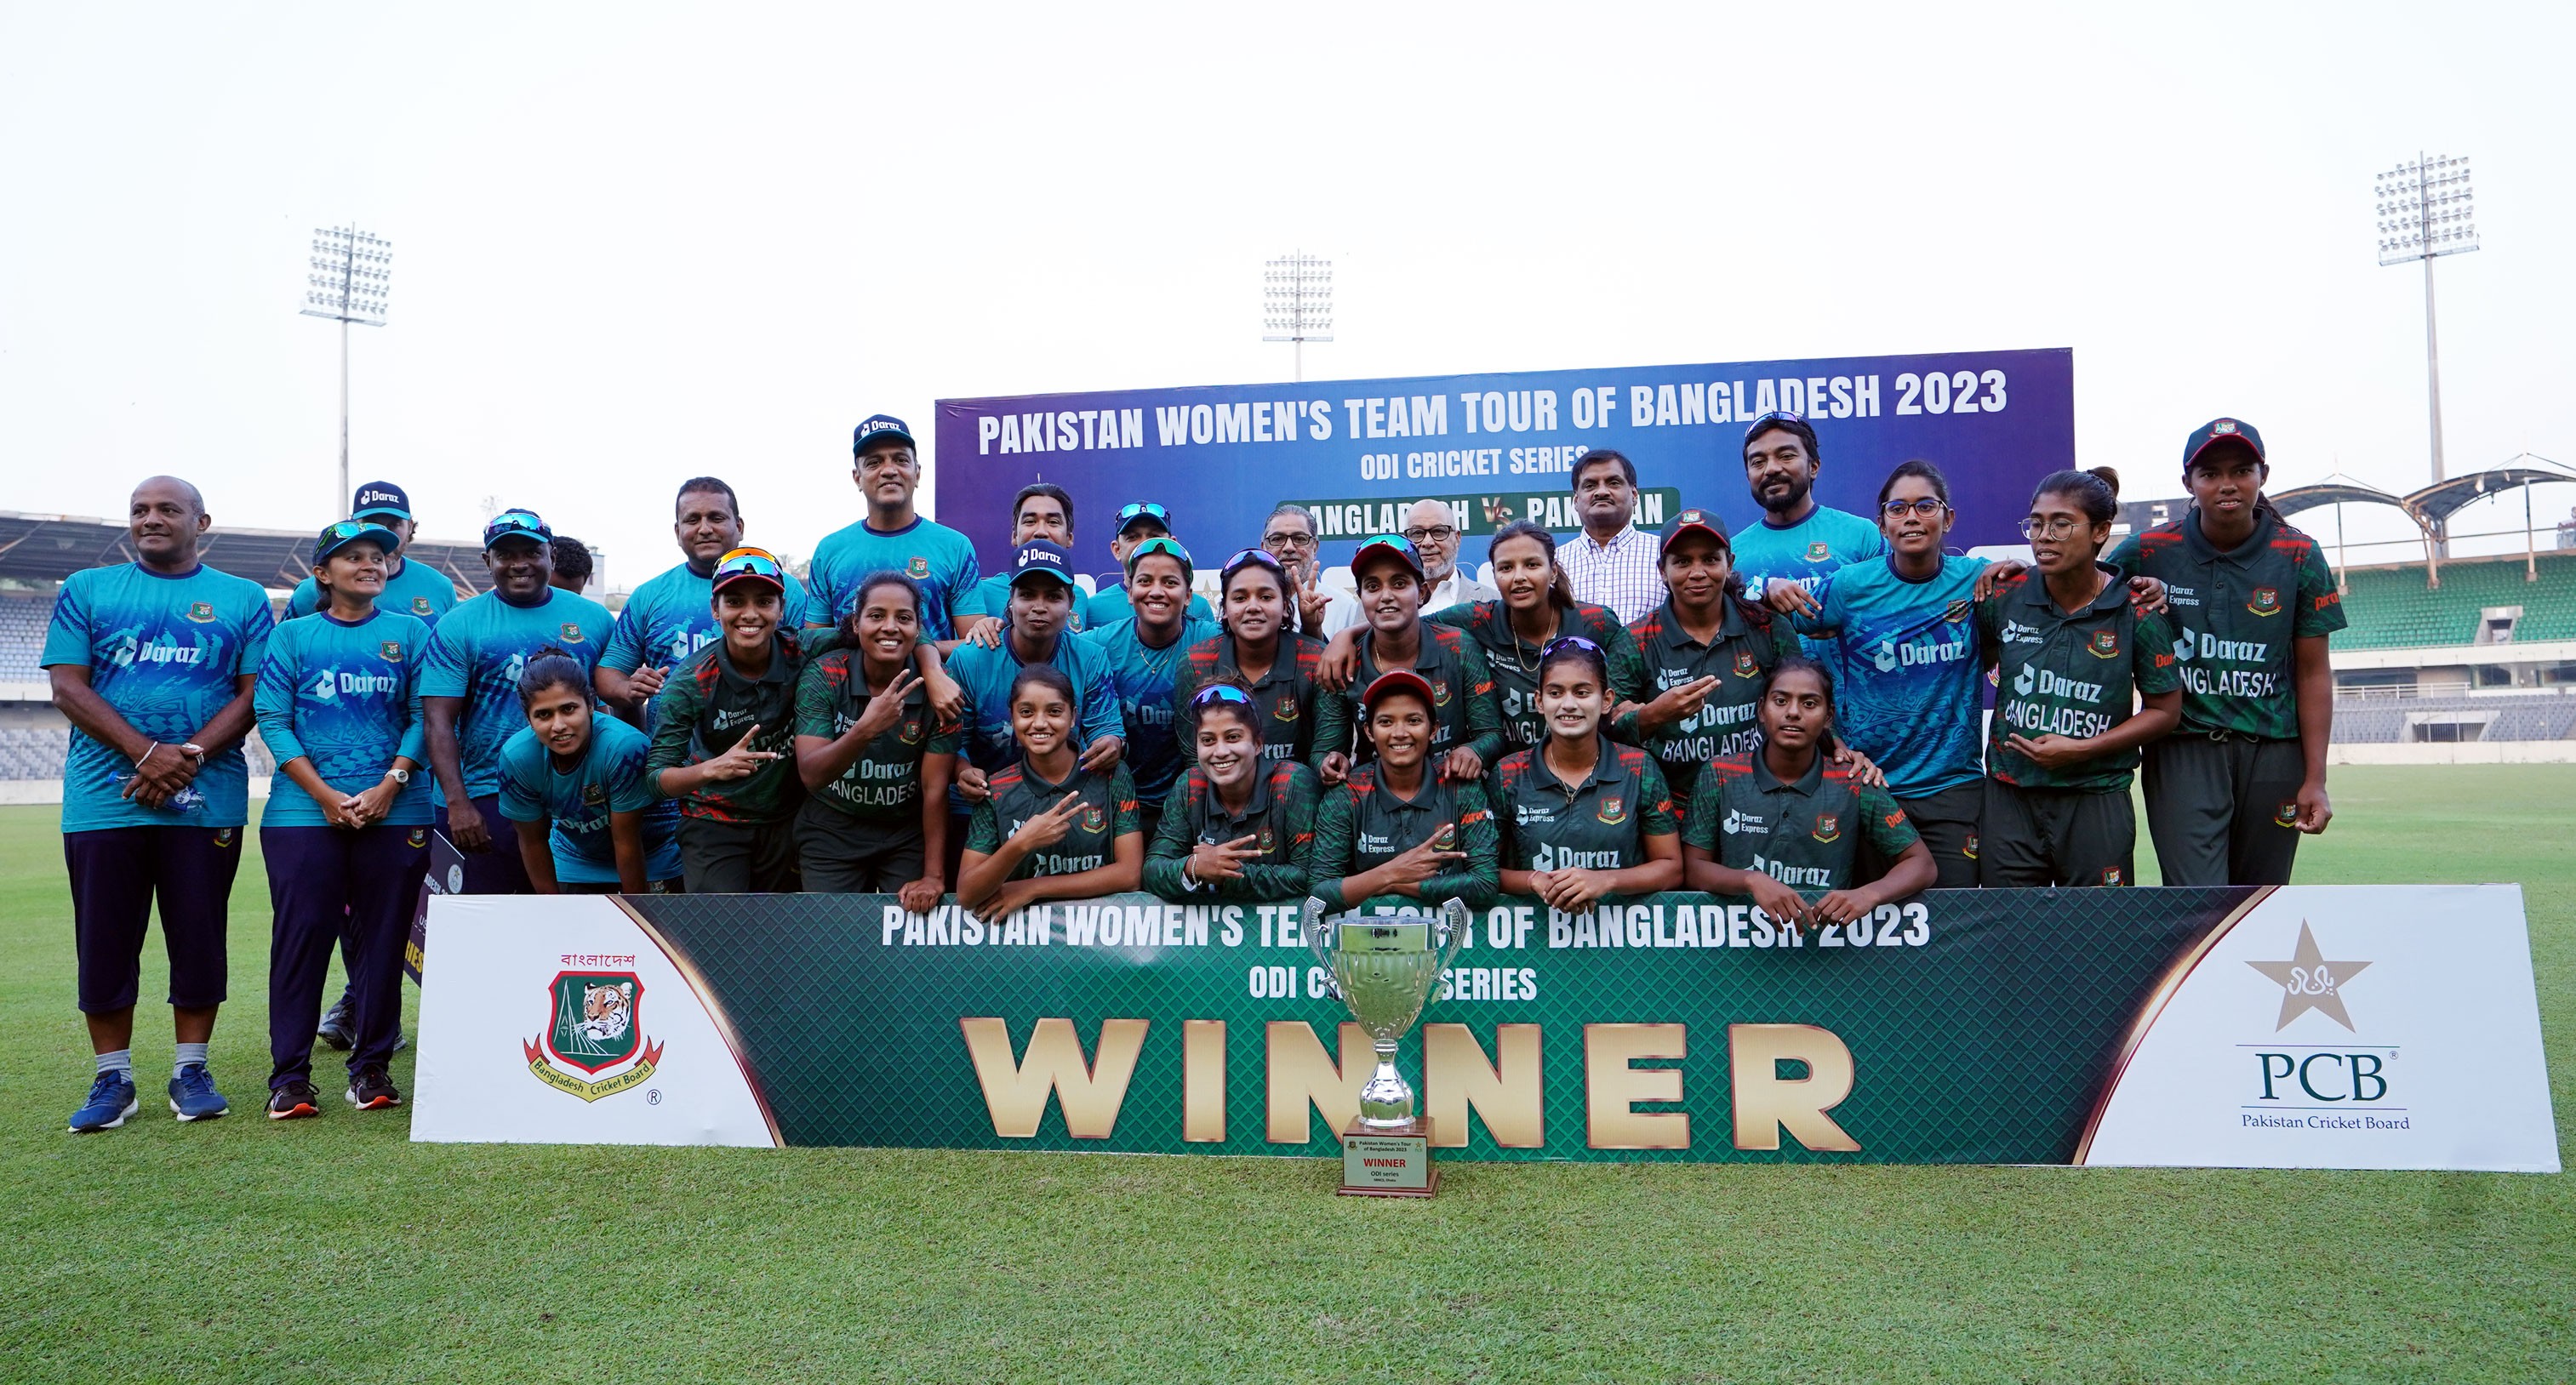 Bangladesh Women won the 3-match ODI Series against Pakistan Women